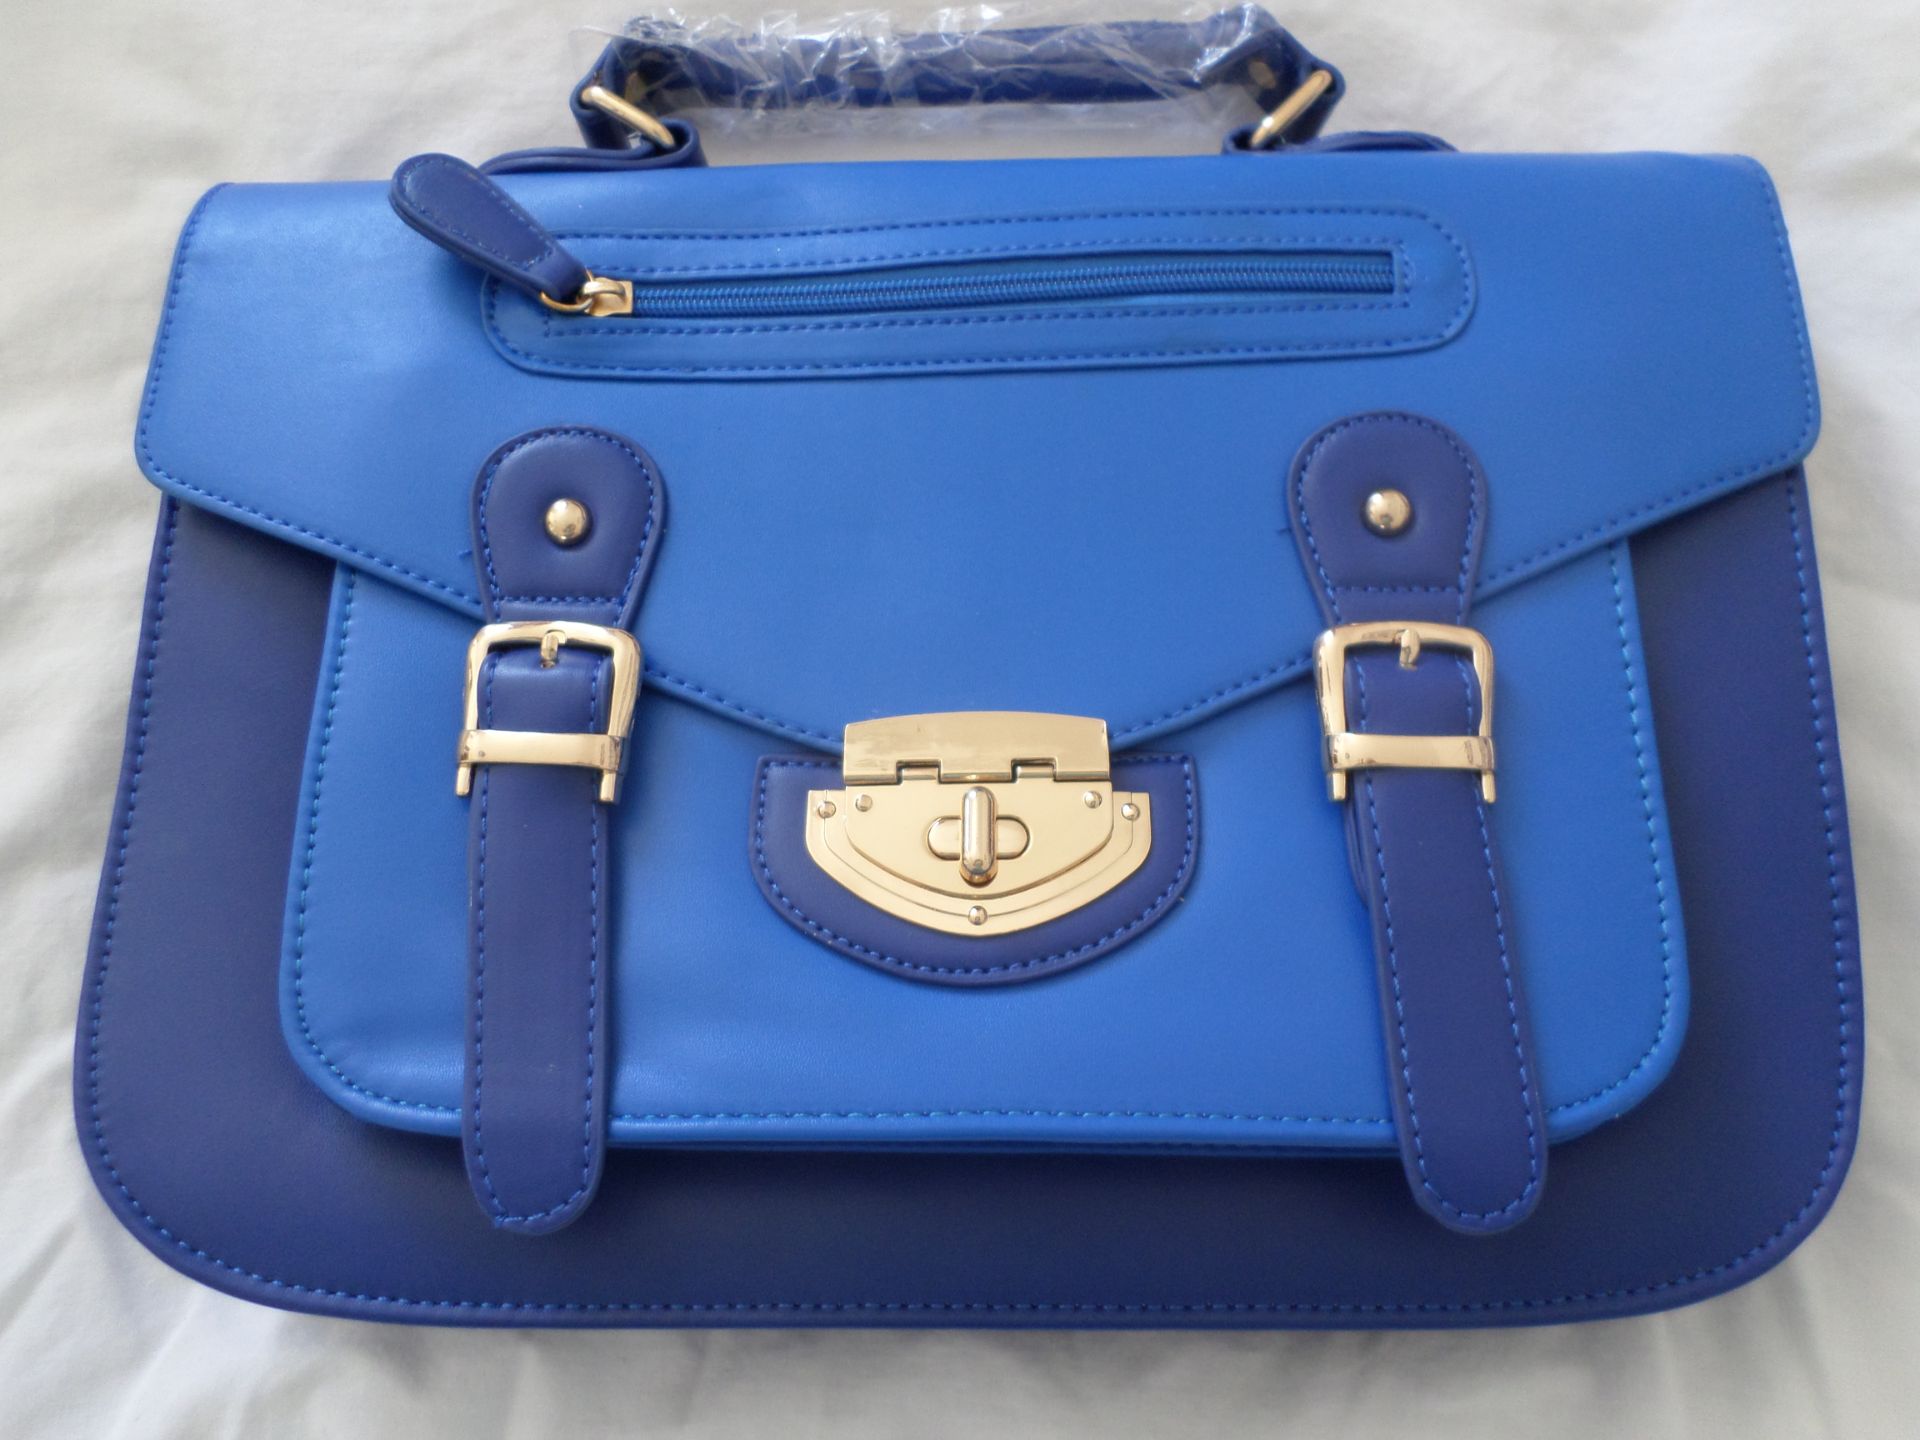 medium ht london satchel. rrp £24.99 each. brand new.